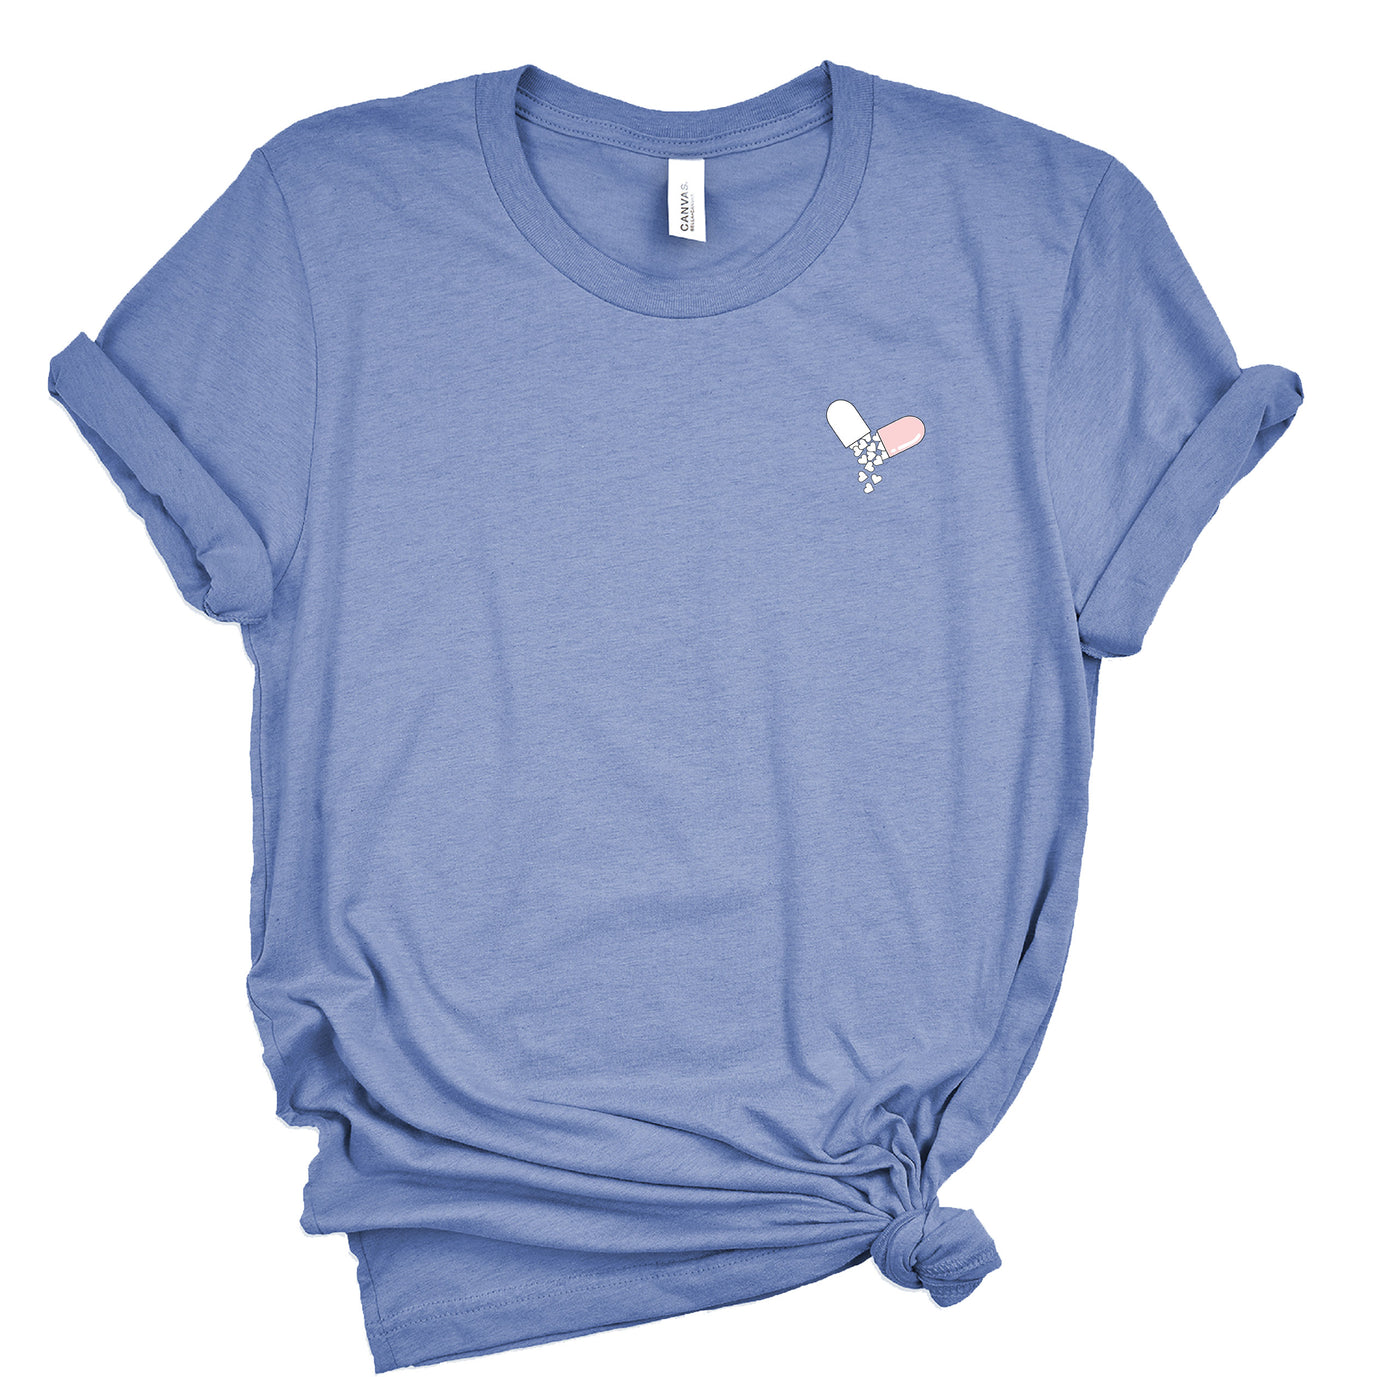 Capsule of Hearts - Shirt